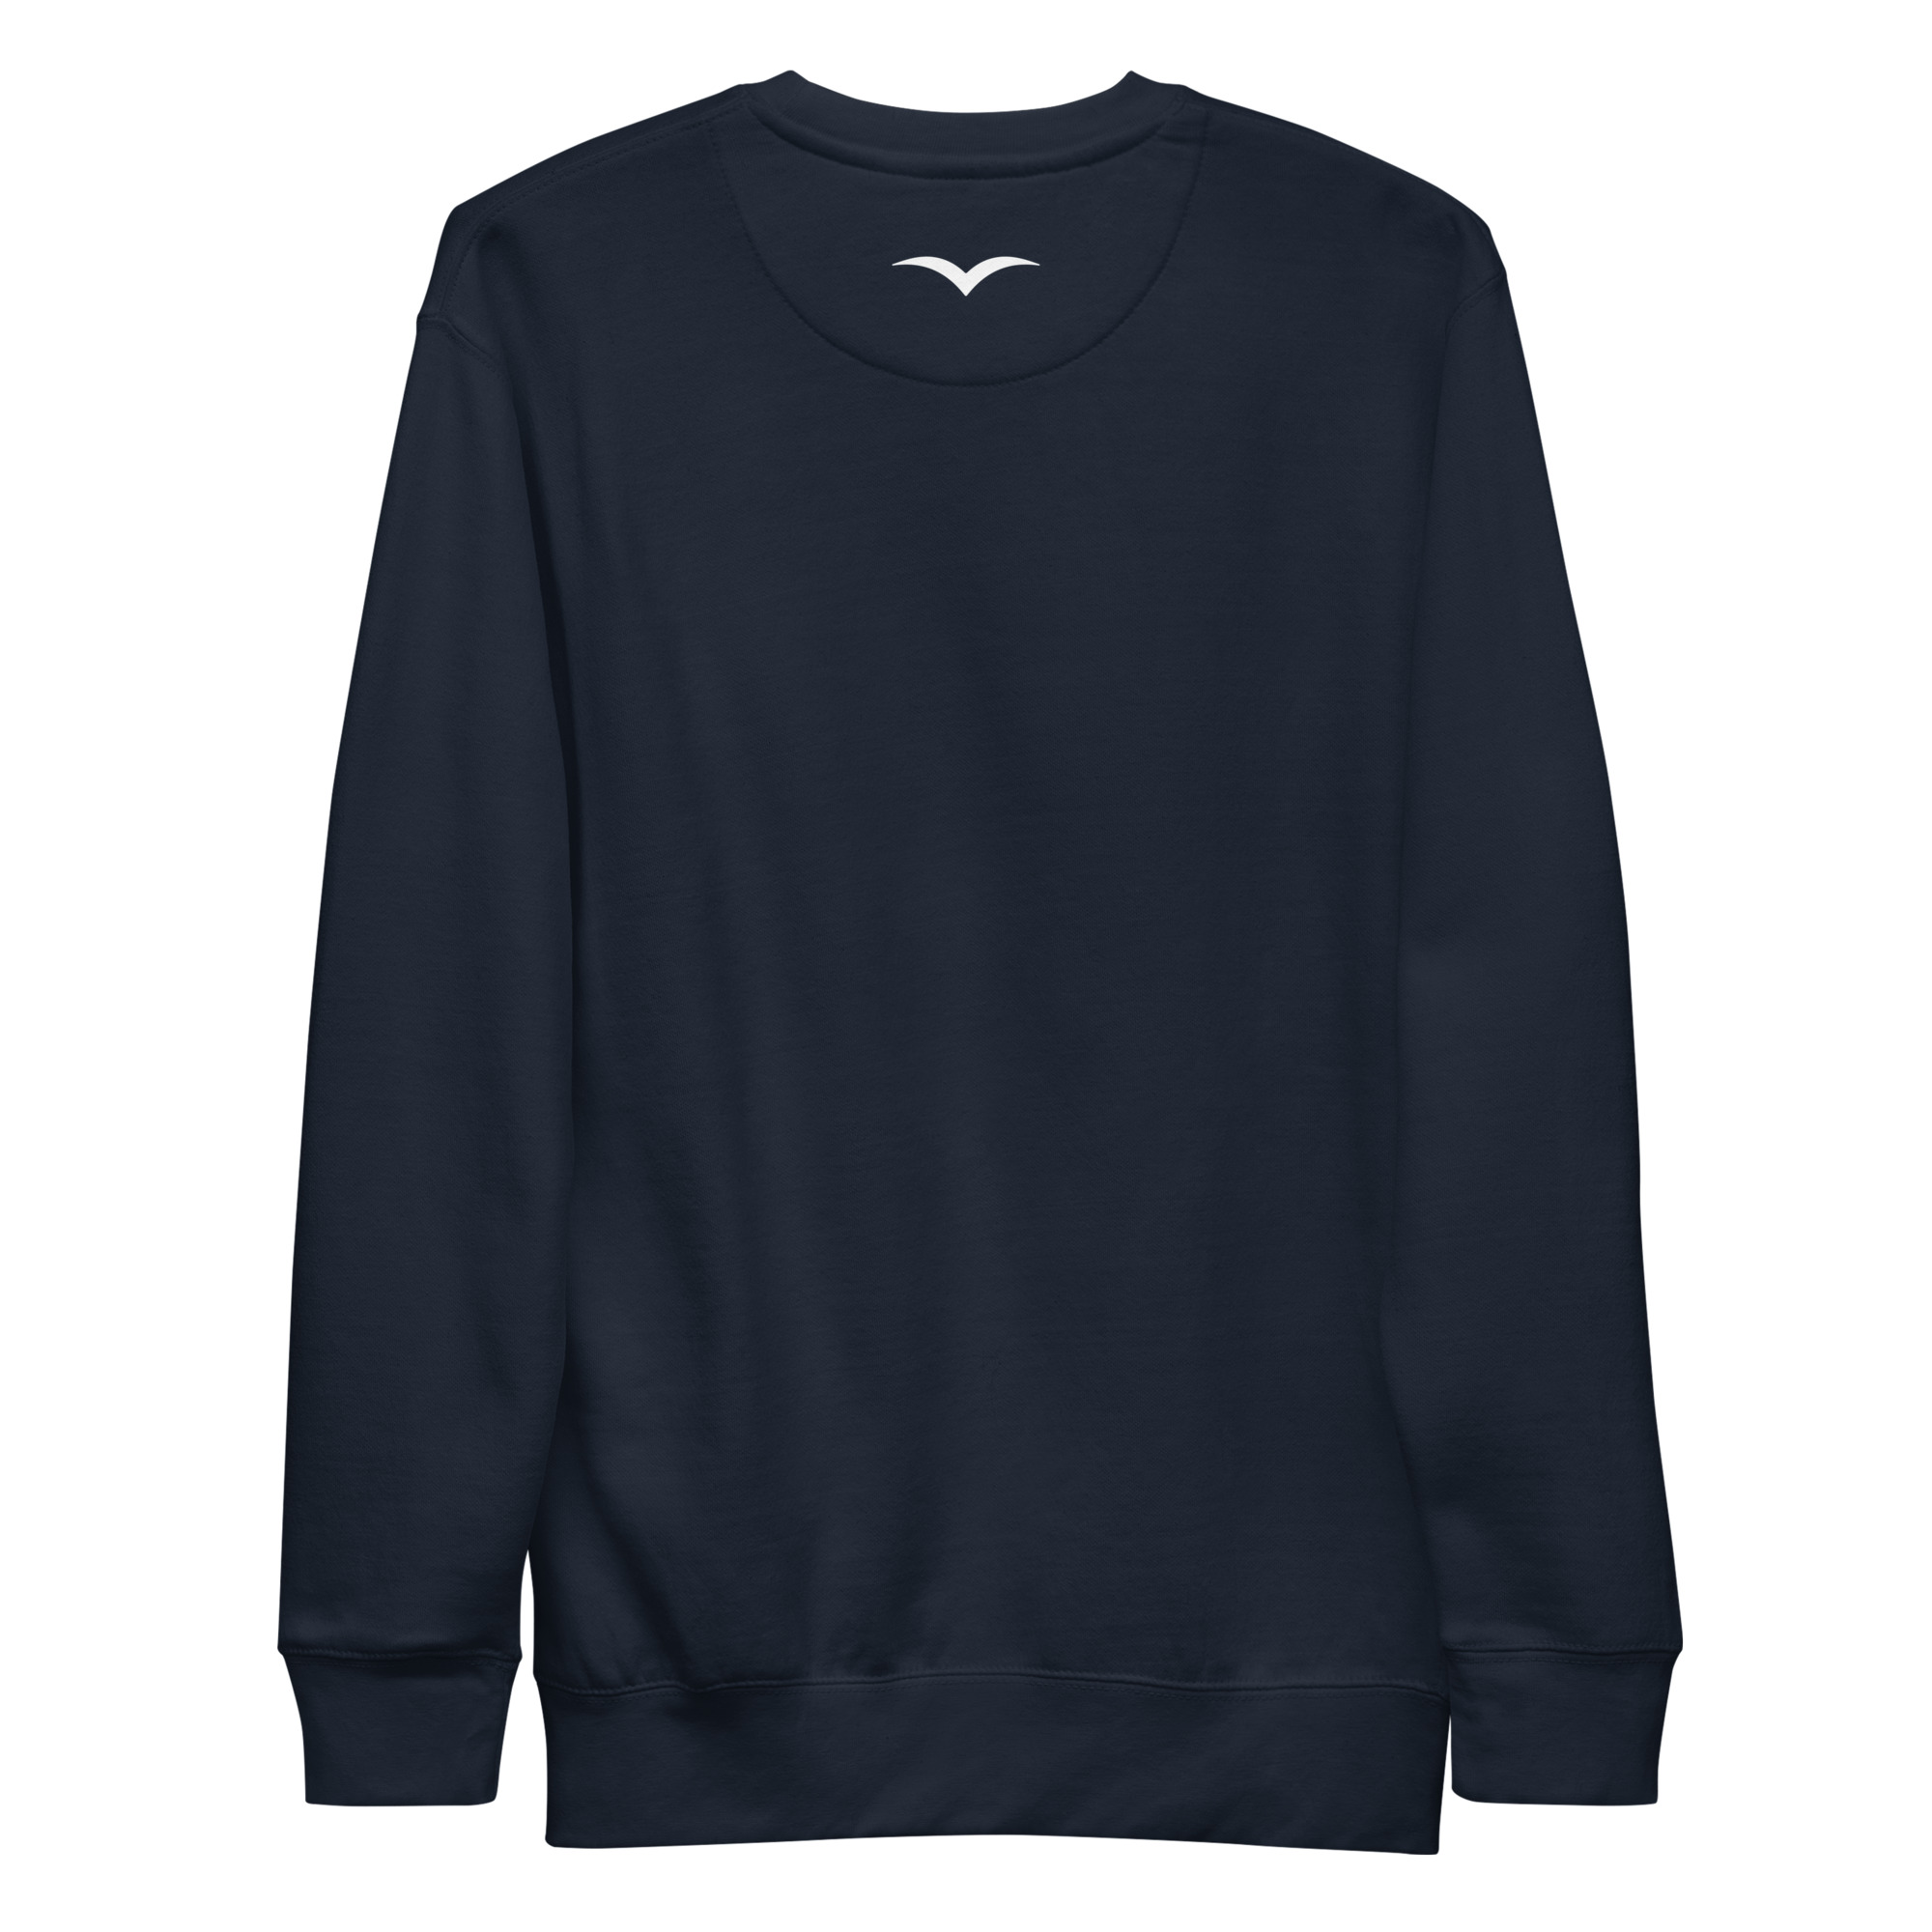 unisex-premium-sweatshirt-navy-blazer-back-6410ddb0869ae.jpg